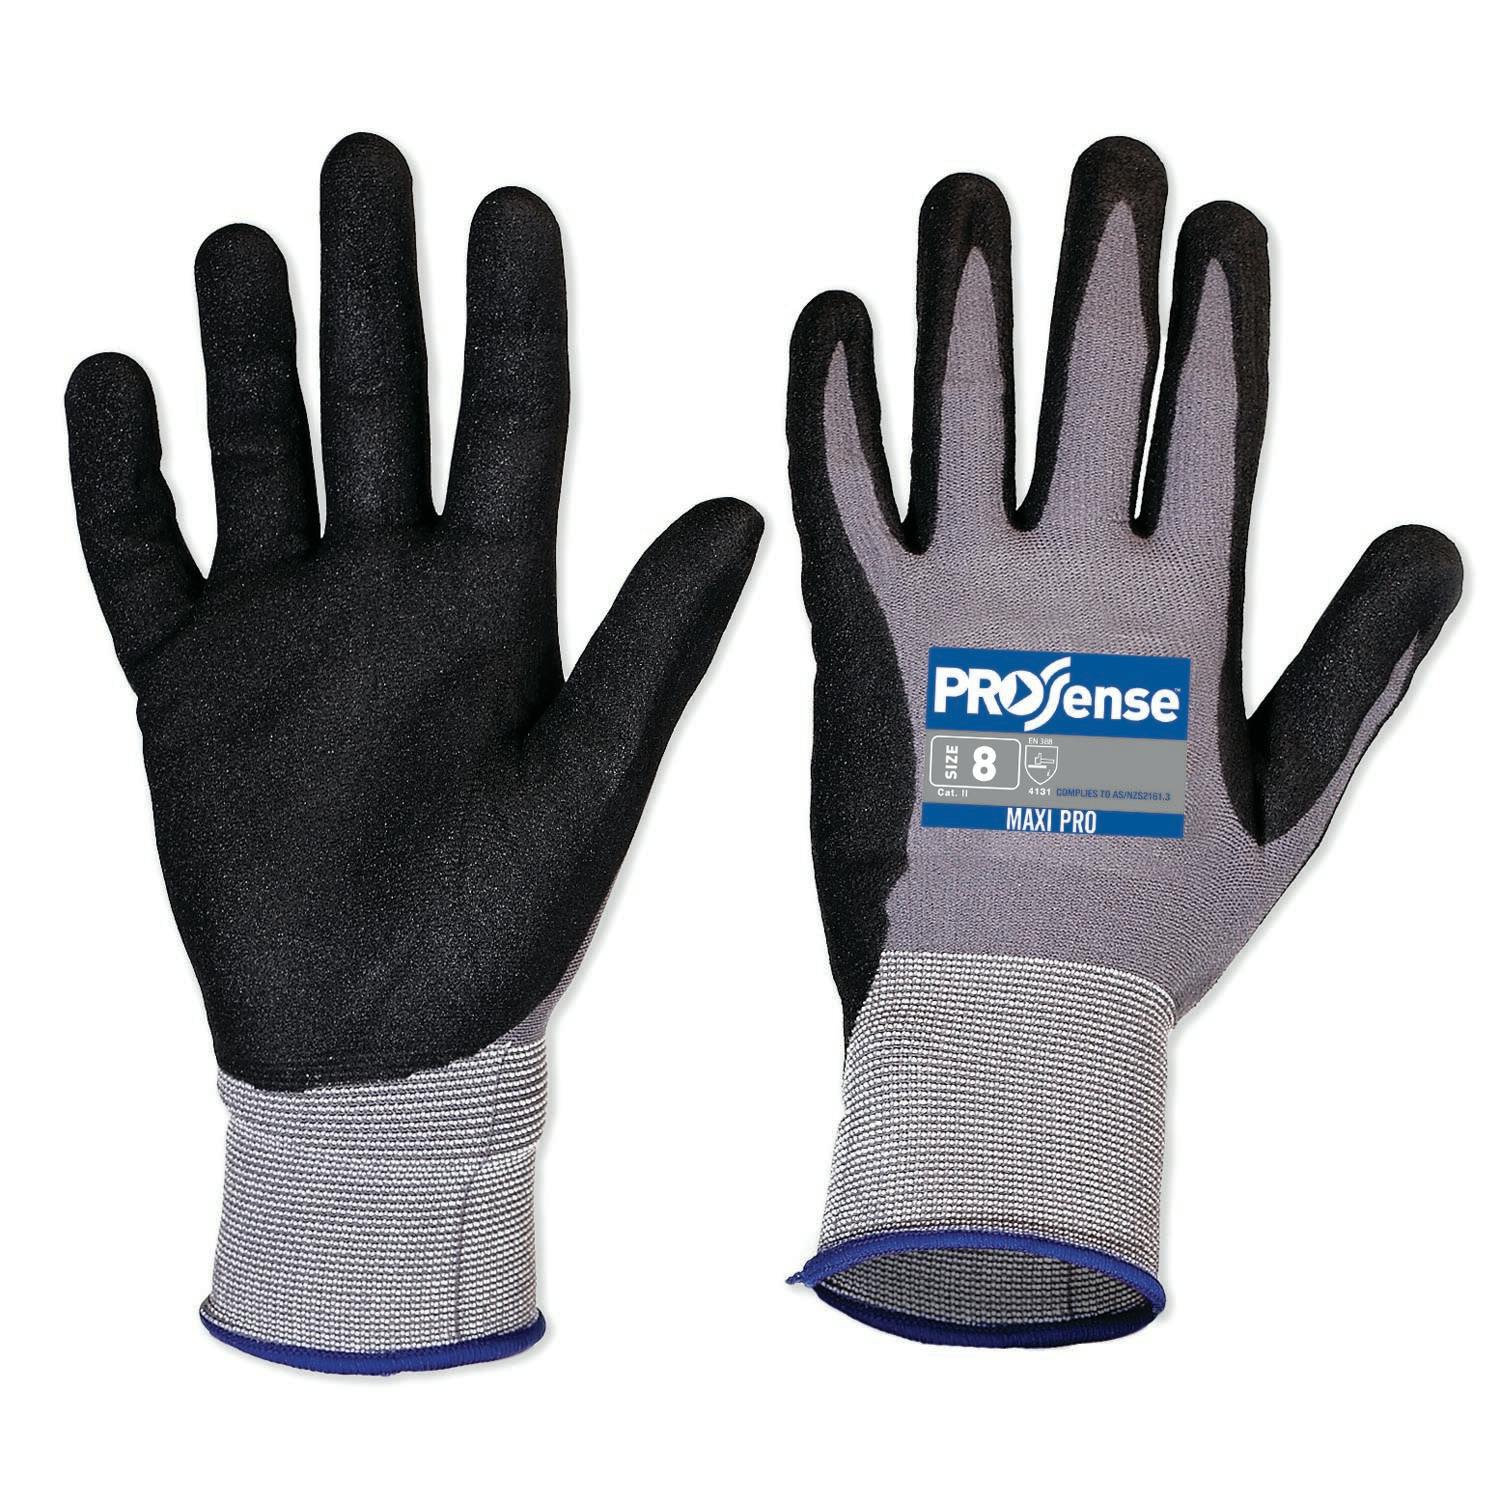 Pro Choice Prosense Maxi-Pro Gloves